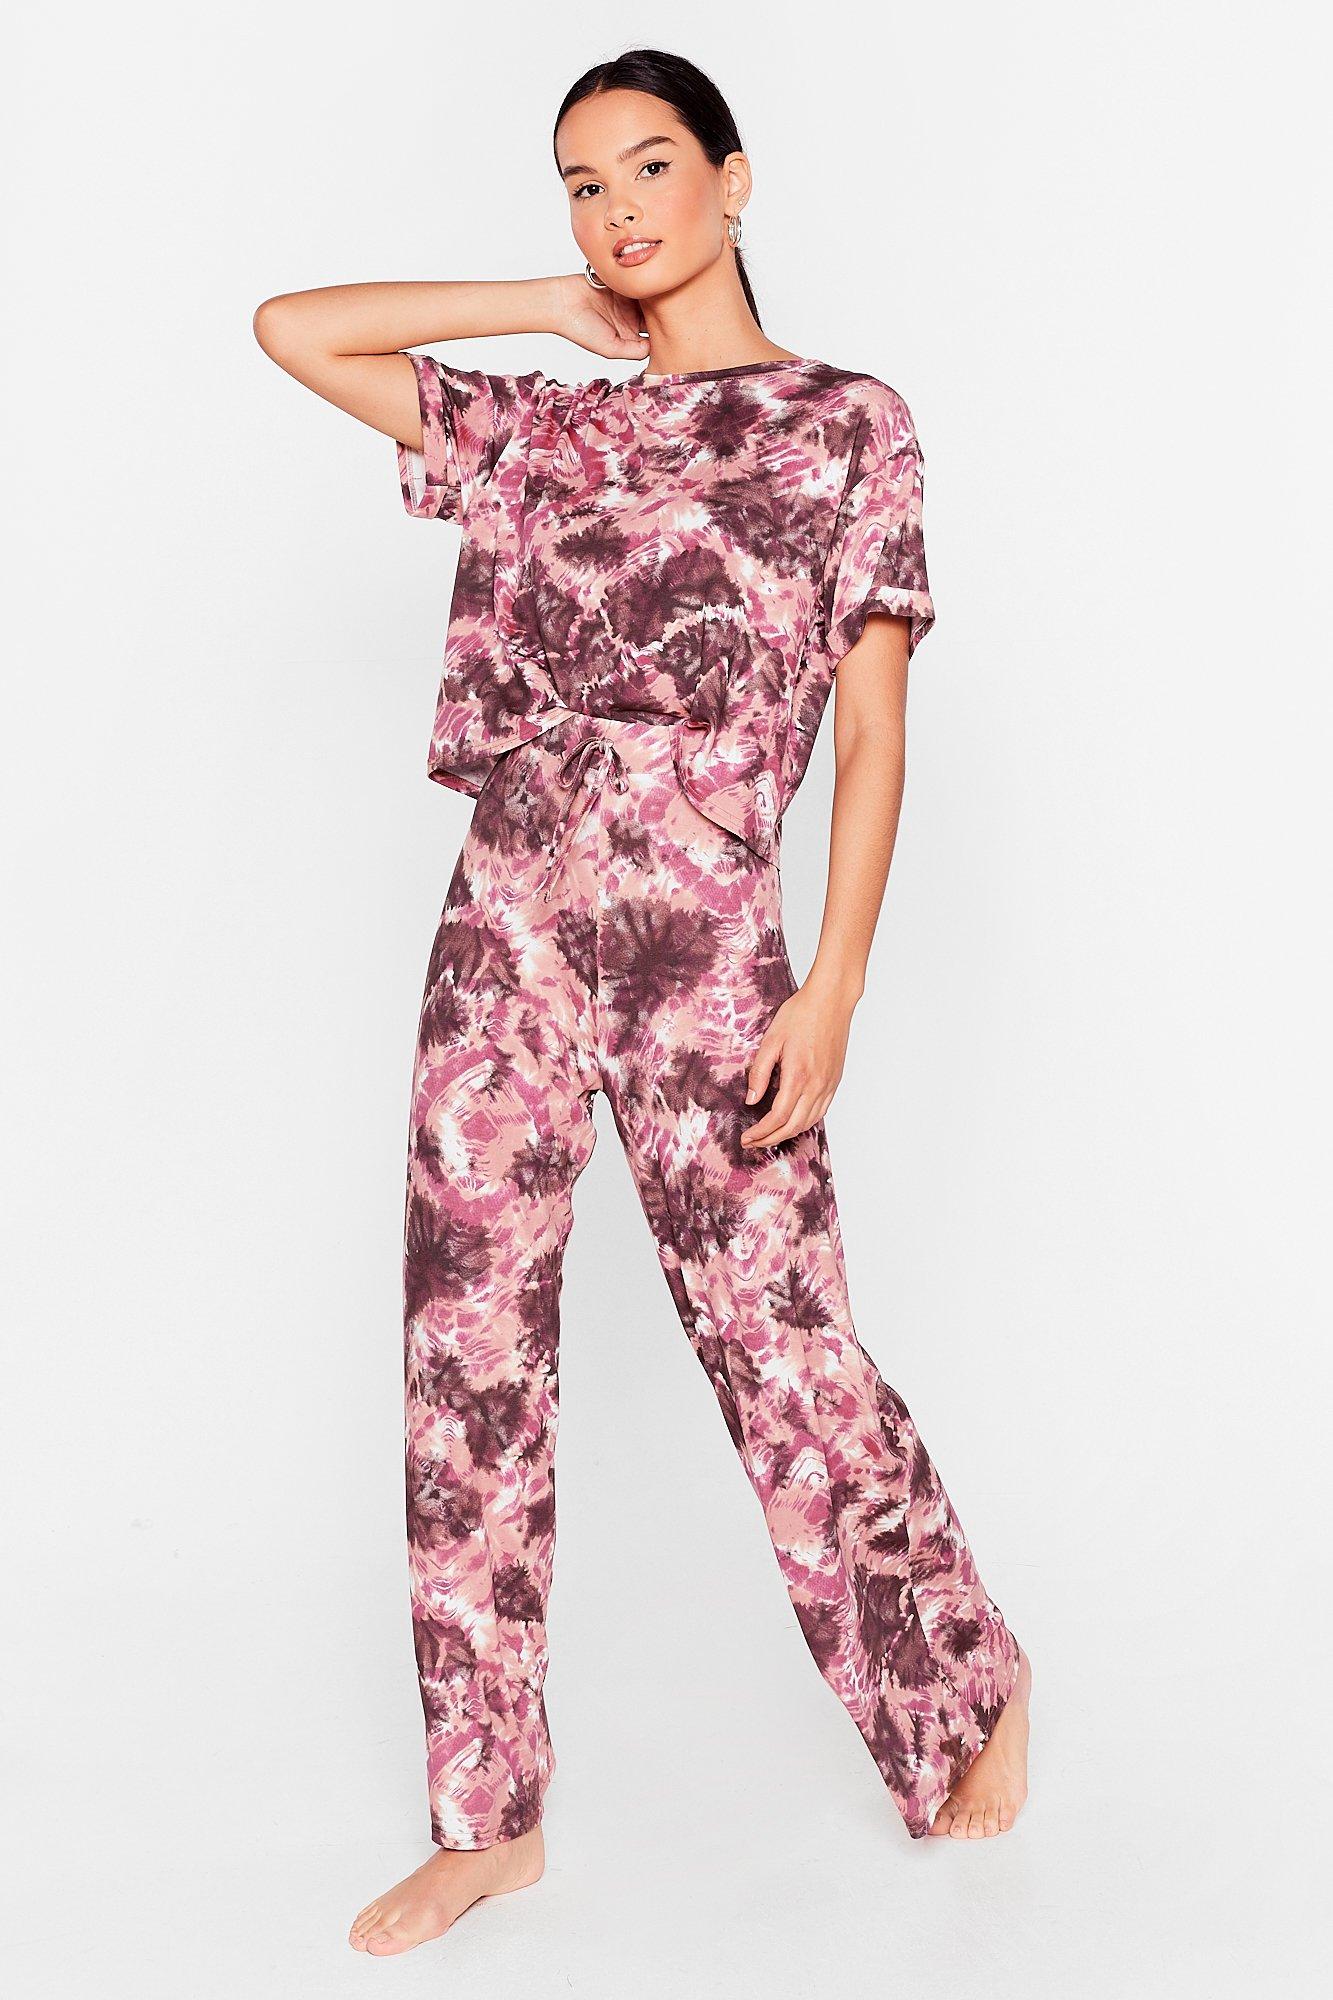 Mathea Womens Two-Piece Pajama Set Tie-Dye Printed Long Casual Set Long Sleeve Top and Pants Pajama